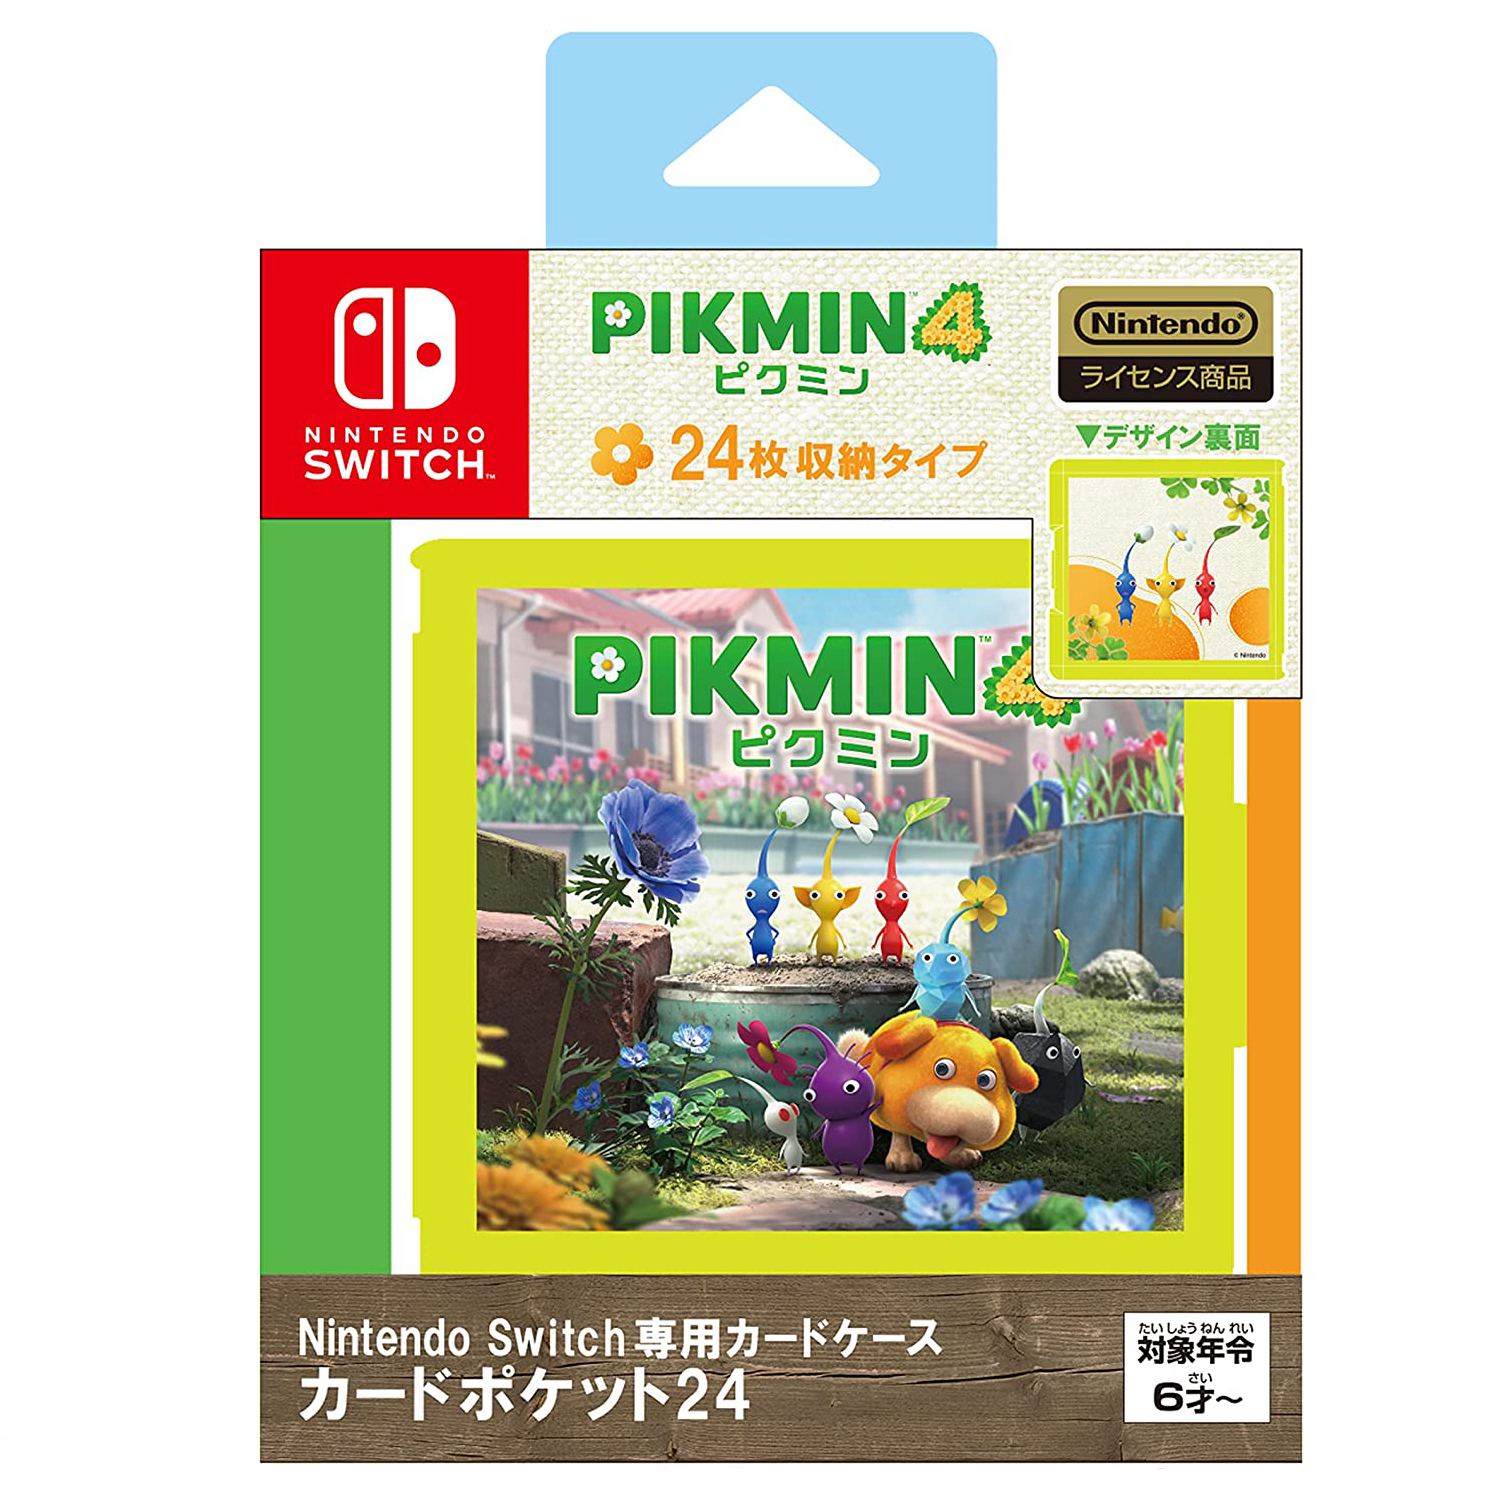 Nintendo Switch Card Pocket 24 (Pikmin 4) for Nintendo Switch 